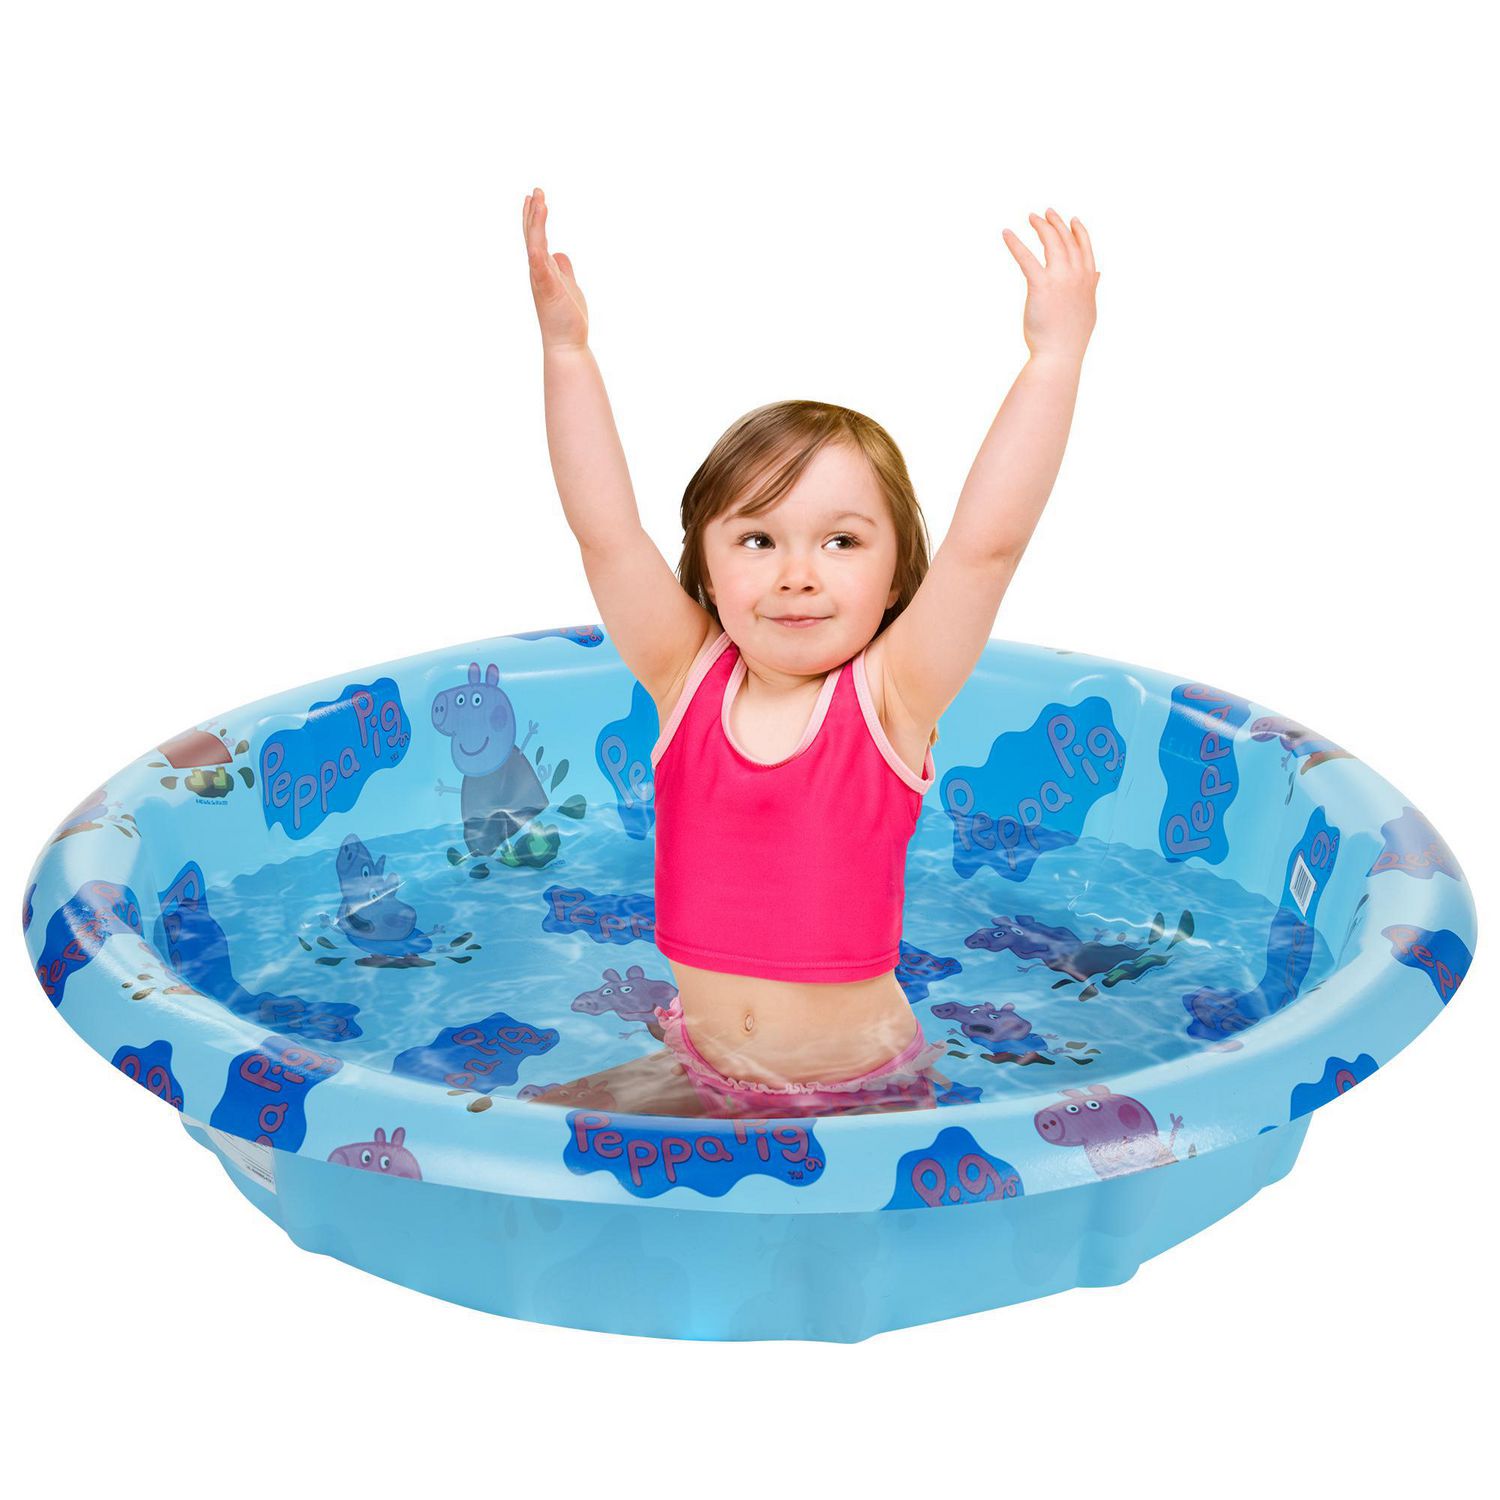 SAICA Toys 9114 Peppa Pig Swimming Pool Inflatable 110 cm 